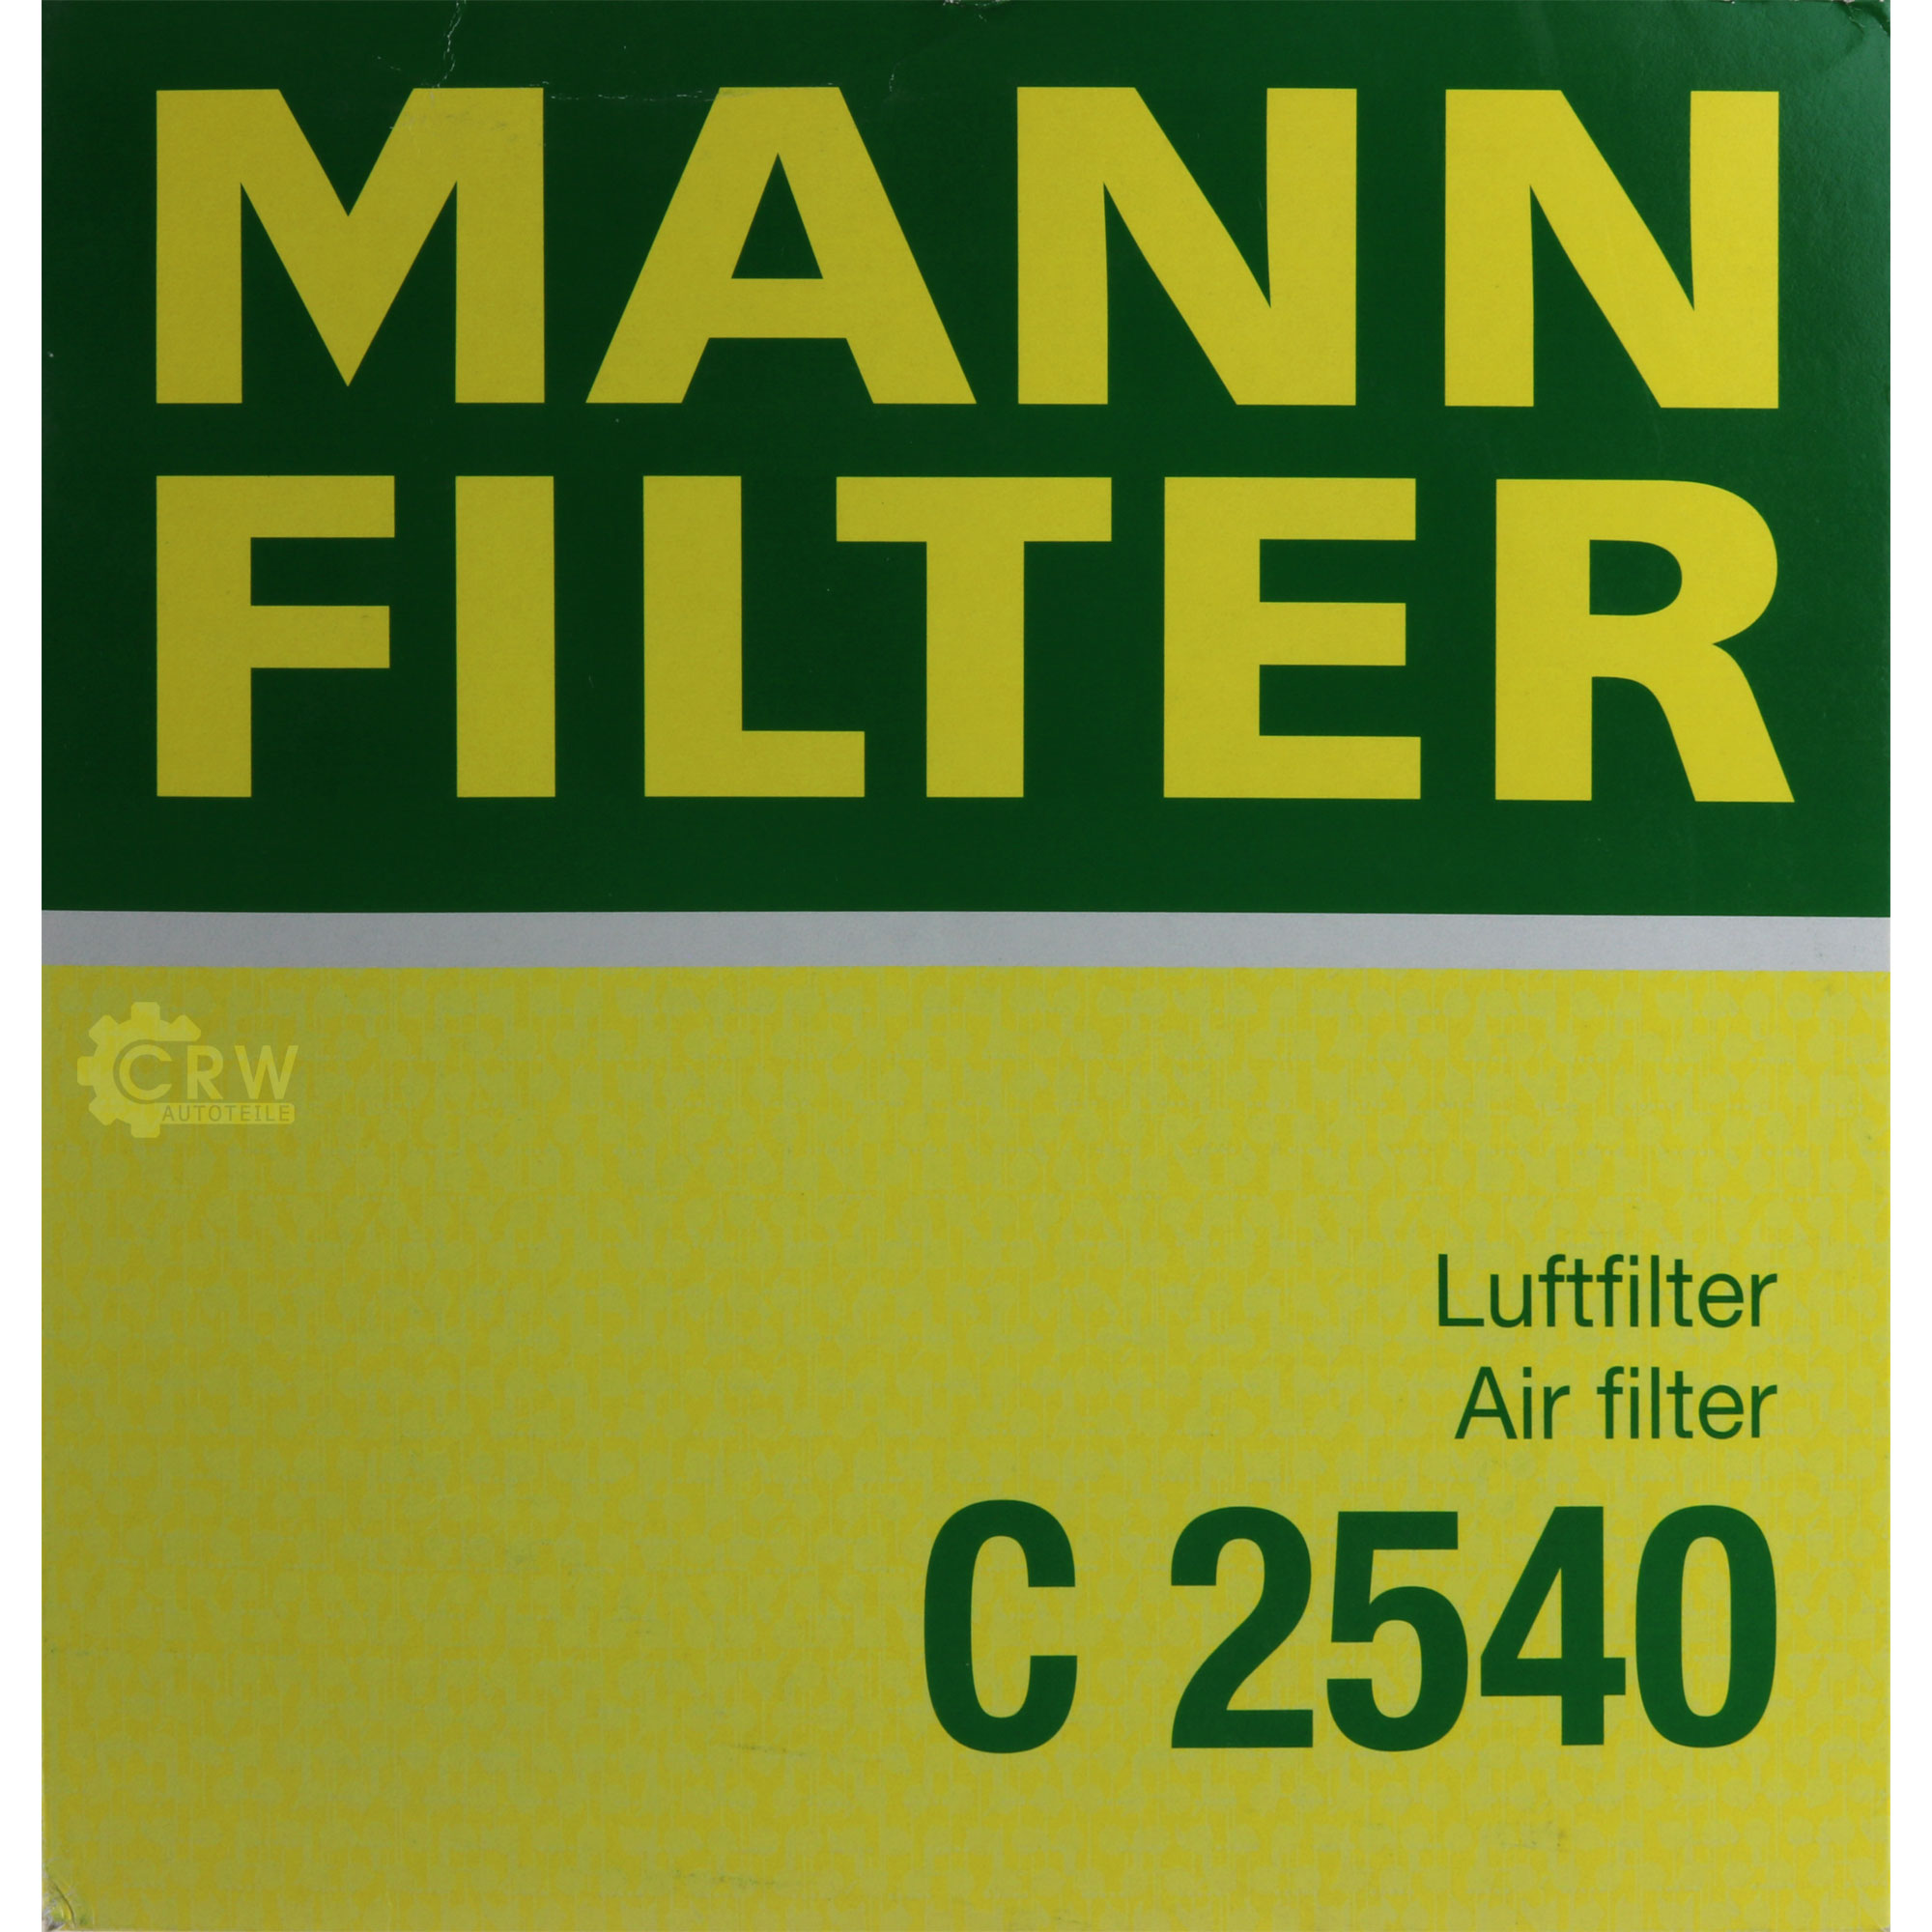 MANN-FILTER Luftfilter für VW Polo 86C 80 1.0 Cat 86 0.9 17 1.1 1.3 Audi